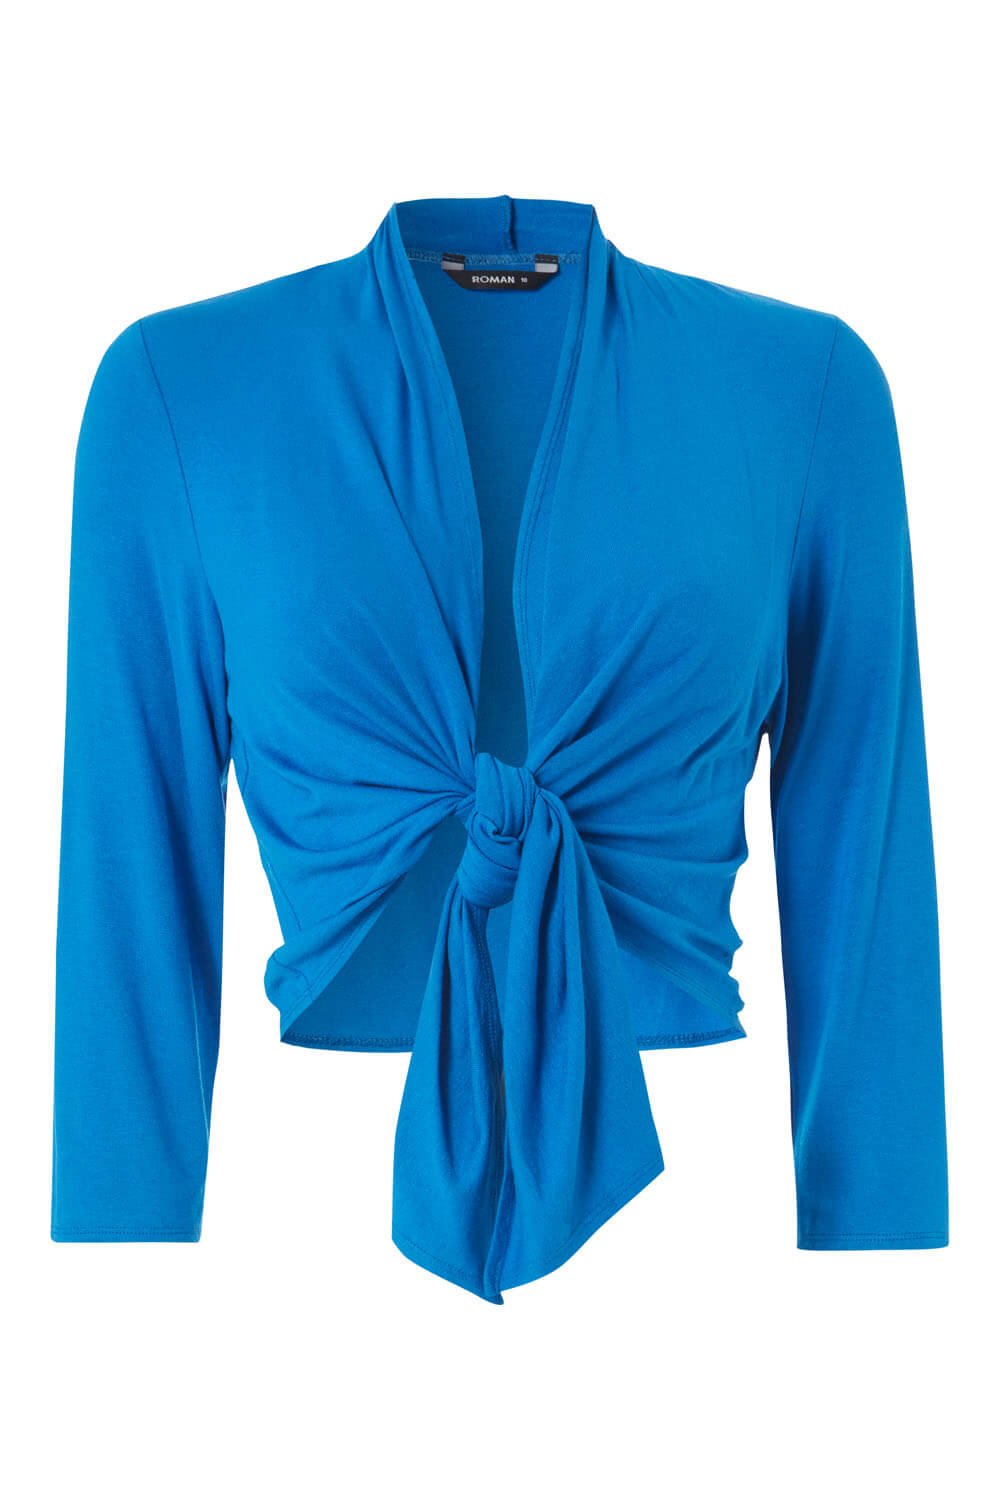 Royal Blue Tie Detail Jersey Shrug, Image 2 of 4